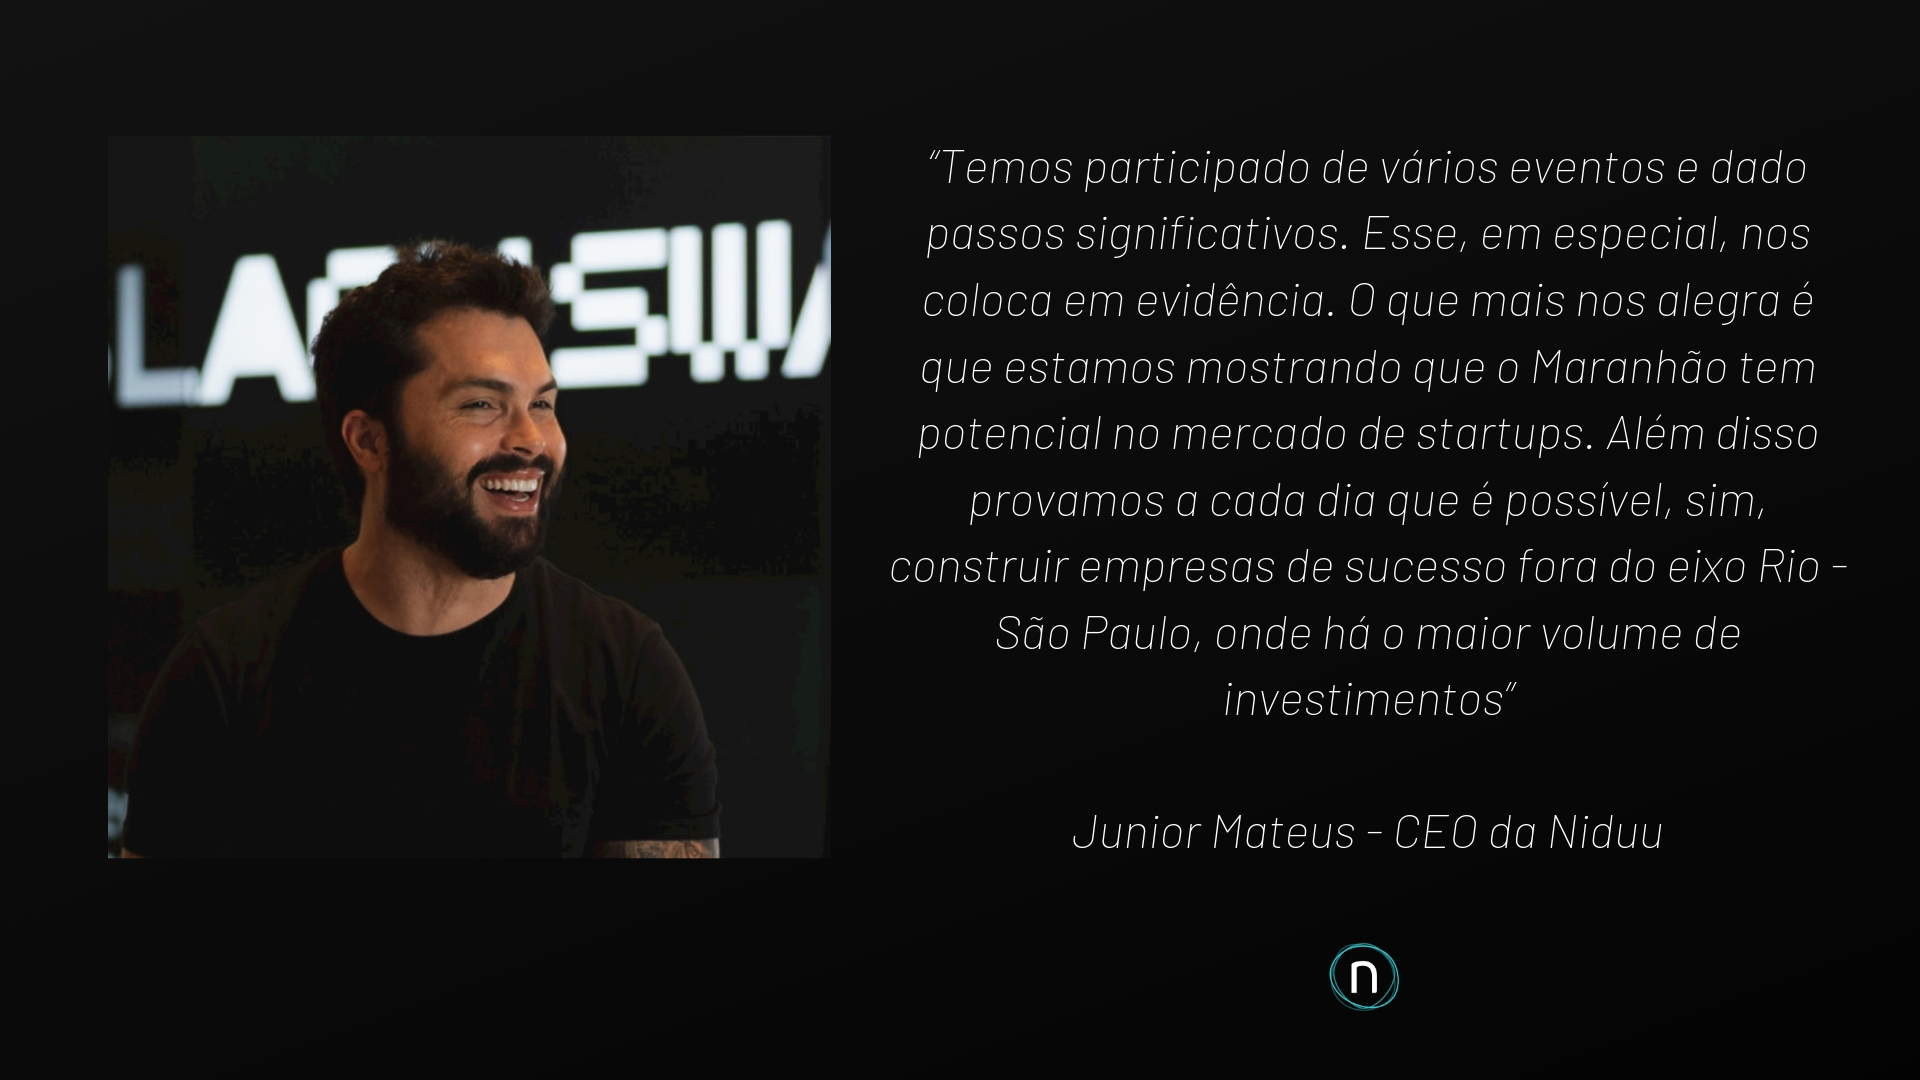 Junior Mateus - CEO da Niduu